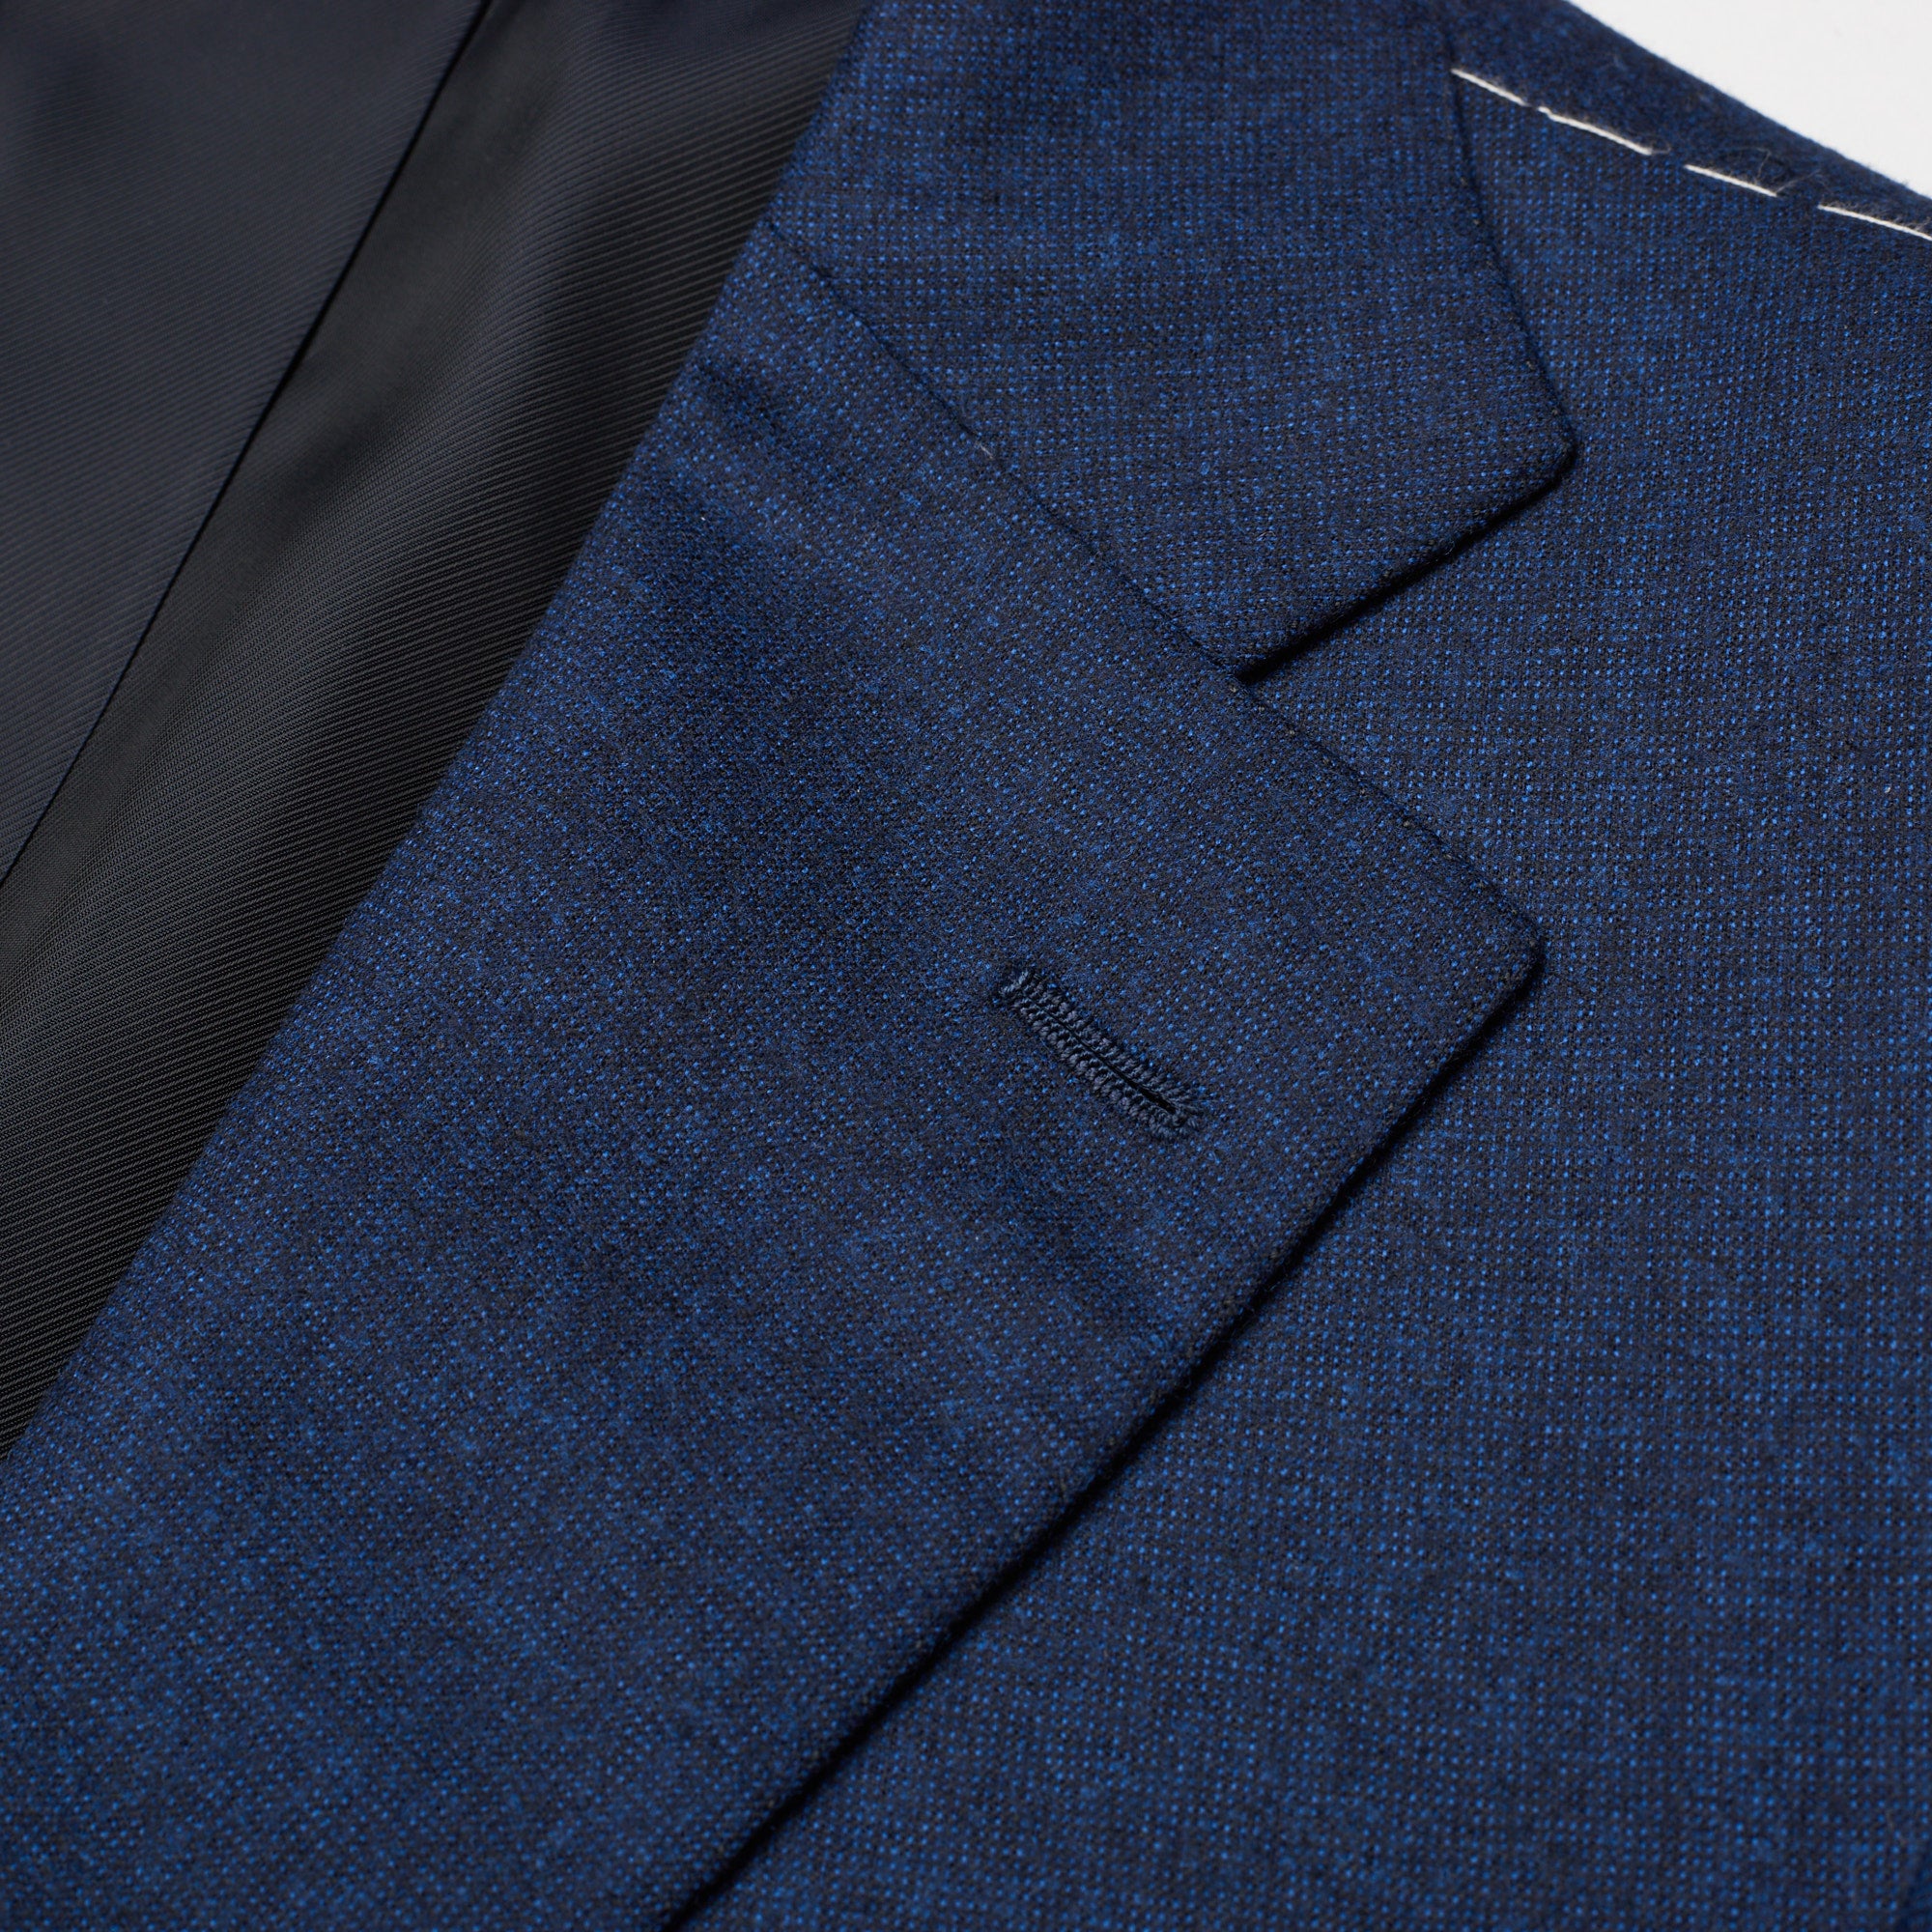 CESARE ATTOLINI Handmade Navy Blue Nailhead Wool Super 120's Suit EU 50 NEW US 40 CESARE ATTOLINI